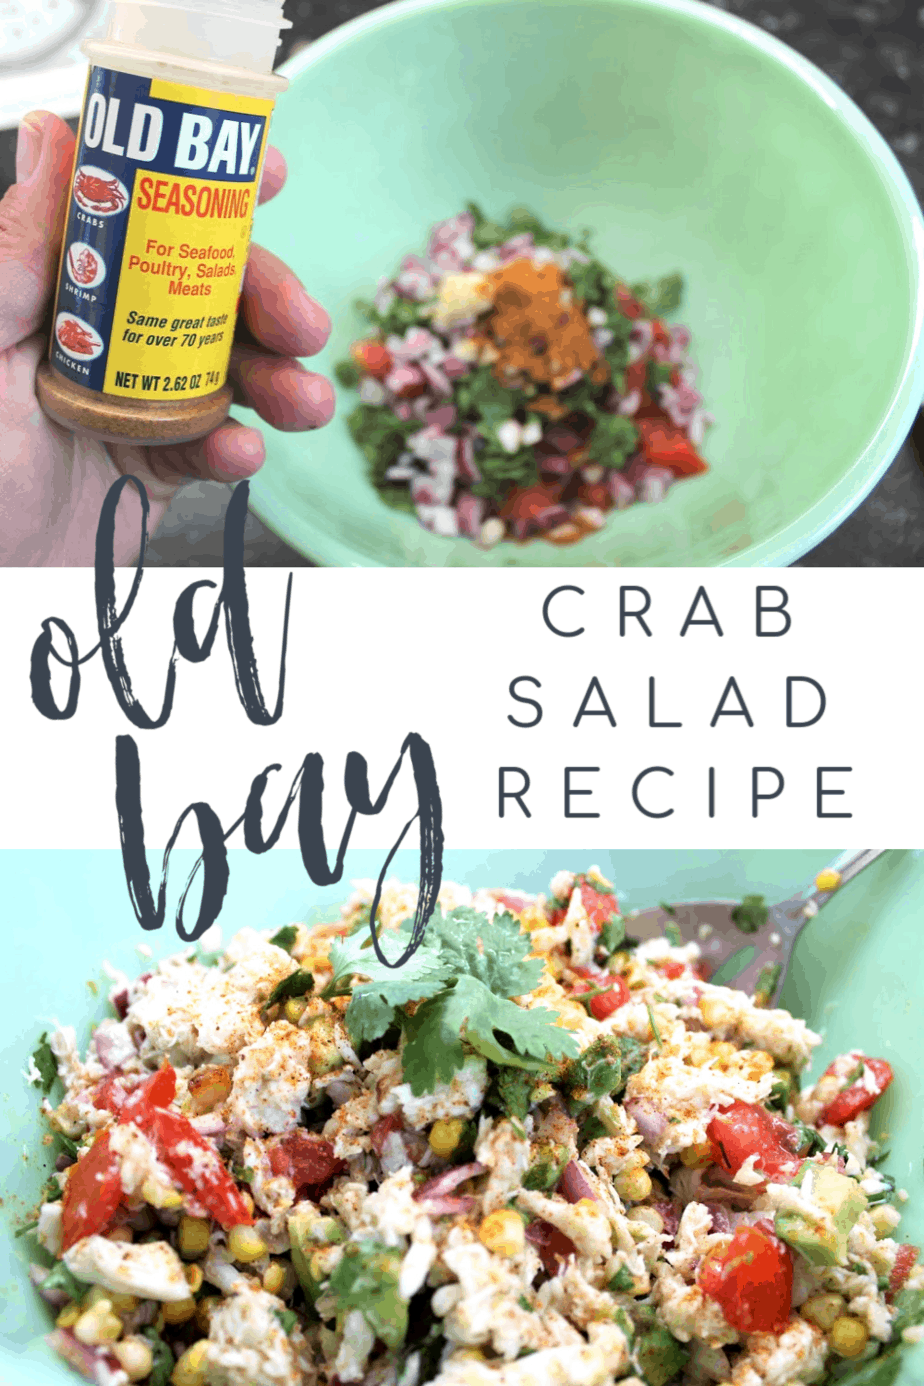 Easy Crab Salad Recipe with Old Bay Seasoning